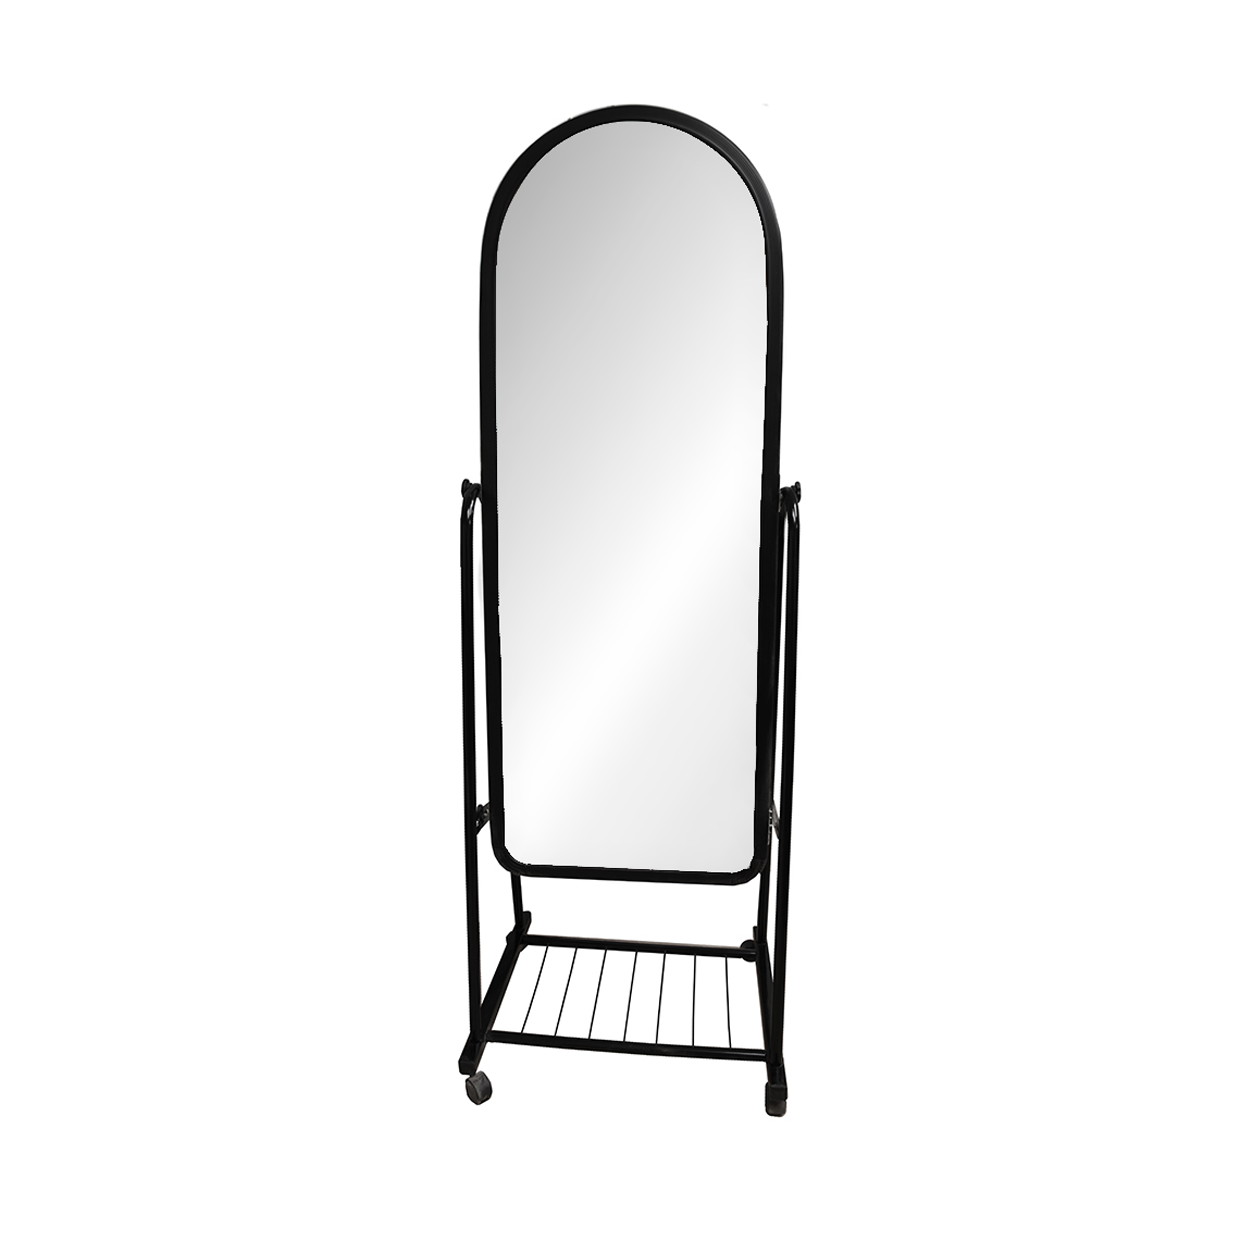 Black Full Length Mirror, Portable, Storage Shelf, Adjustable Stand